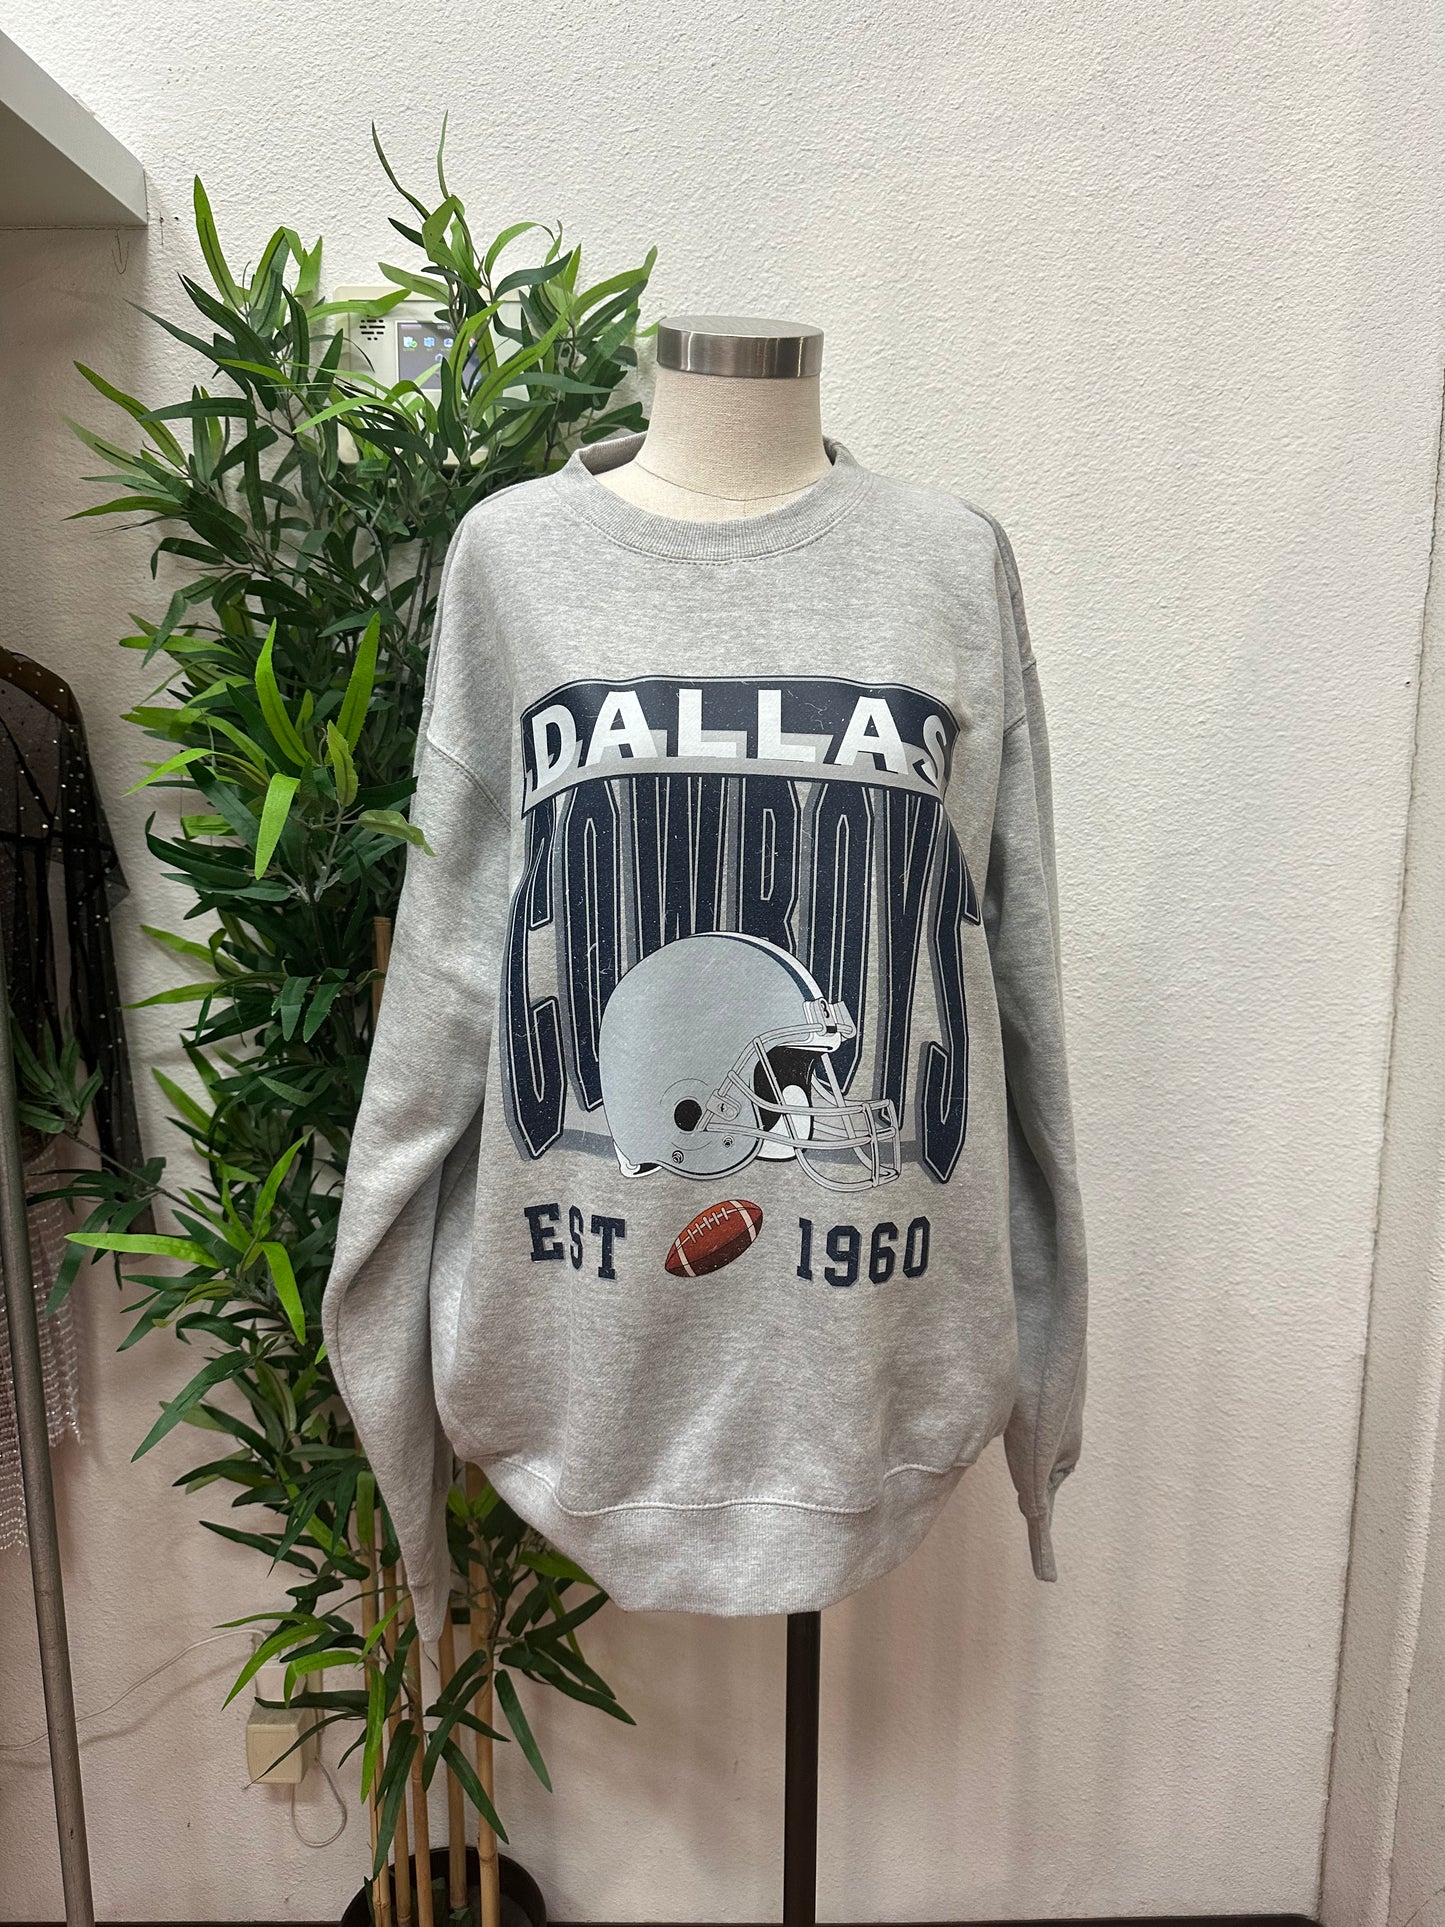 Dallas Football 1960